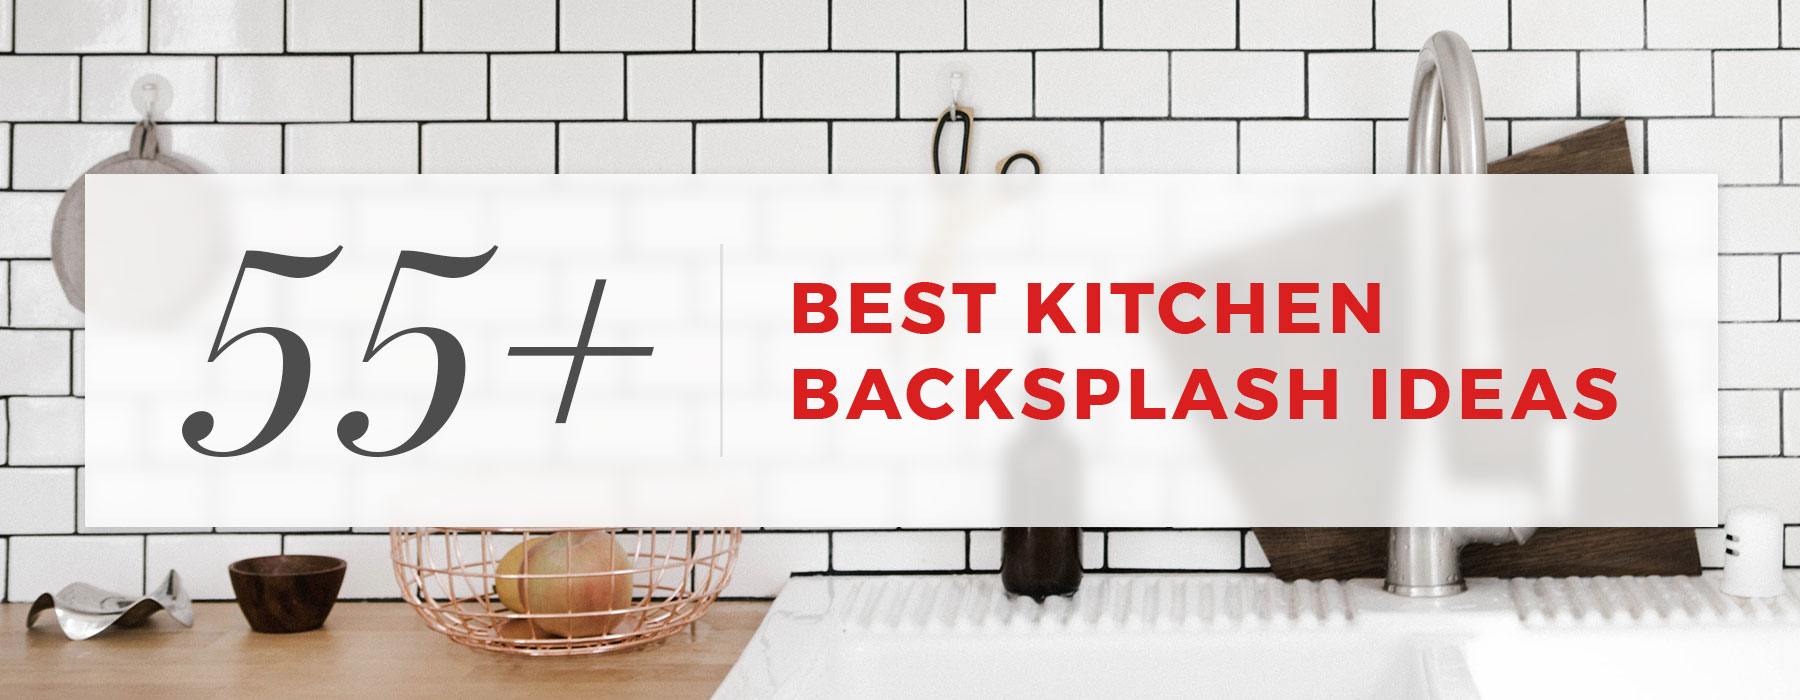 55 Best Kitchen Backsplash Ideas For 2020,Cheap Easy Diy Outdoor Christmas Decorations